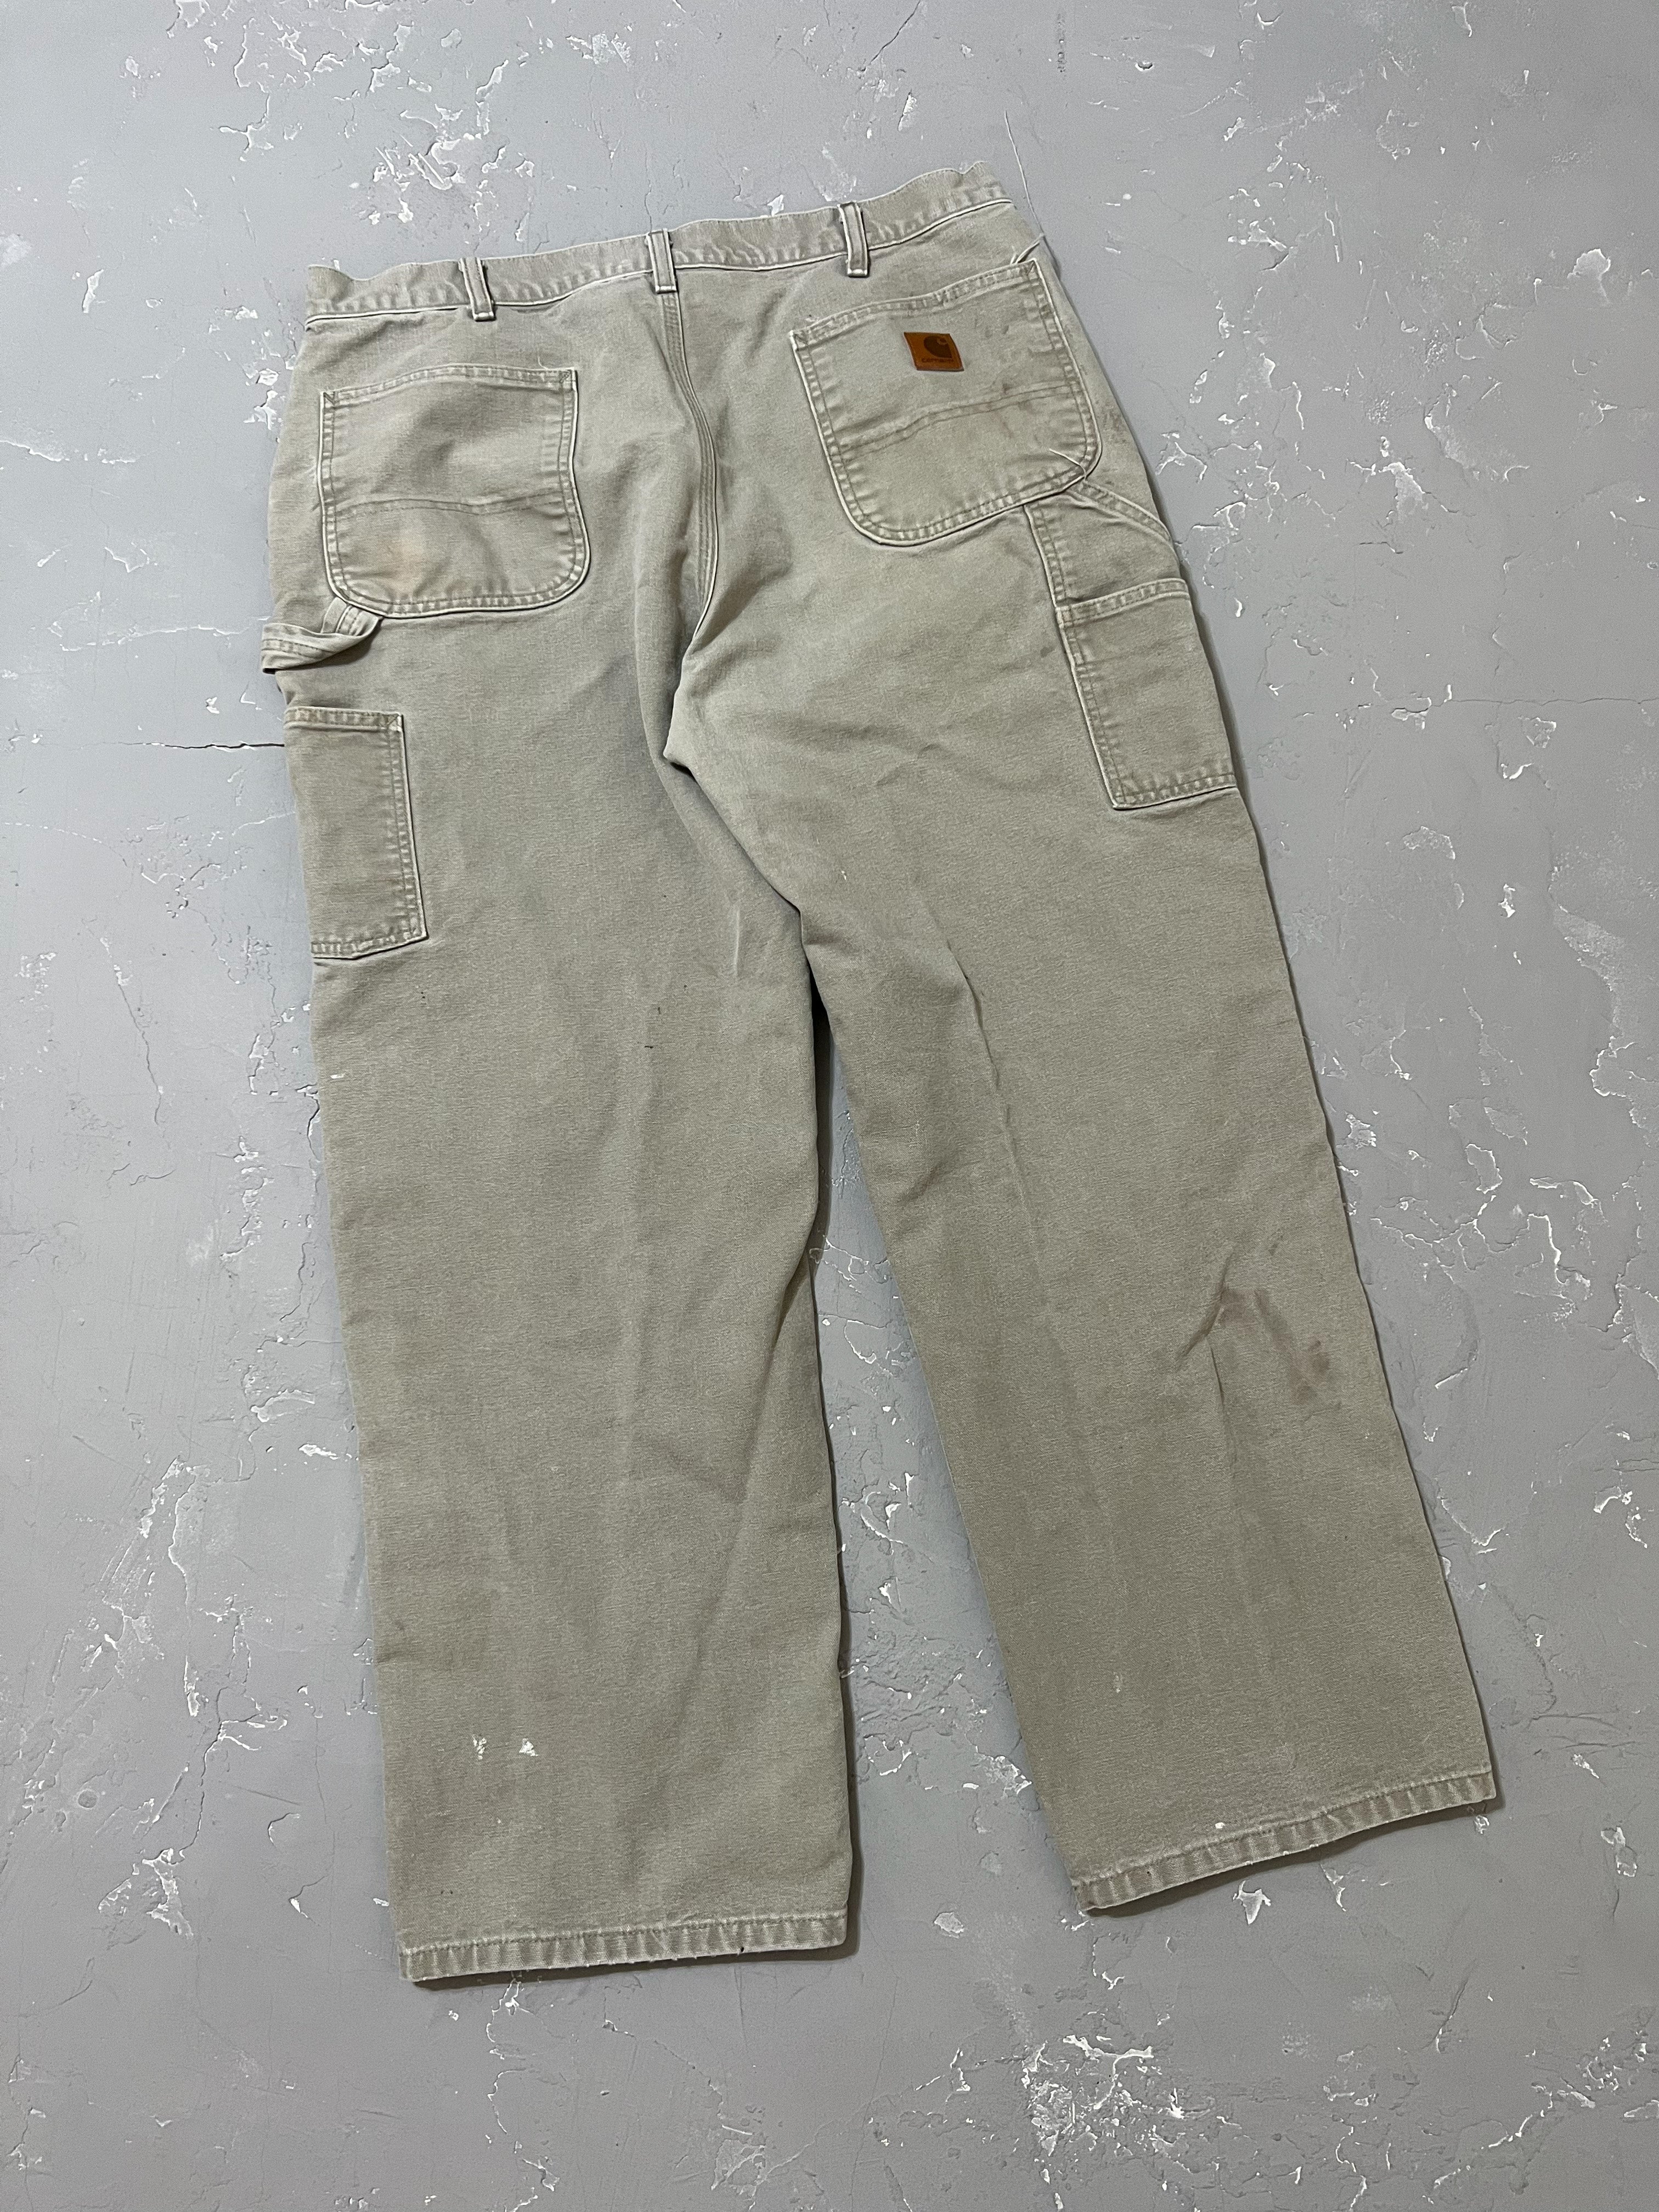 Carhartt Fossil Gray Painted Carpenter Pants [36 x 32]